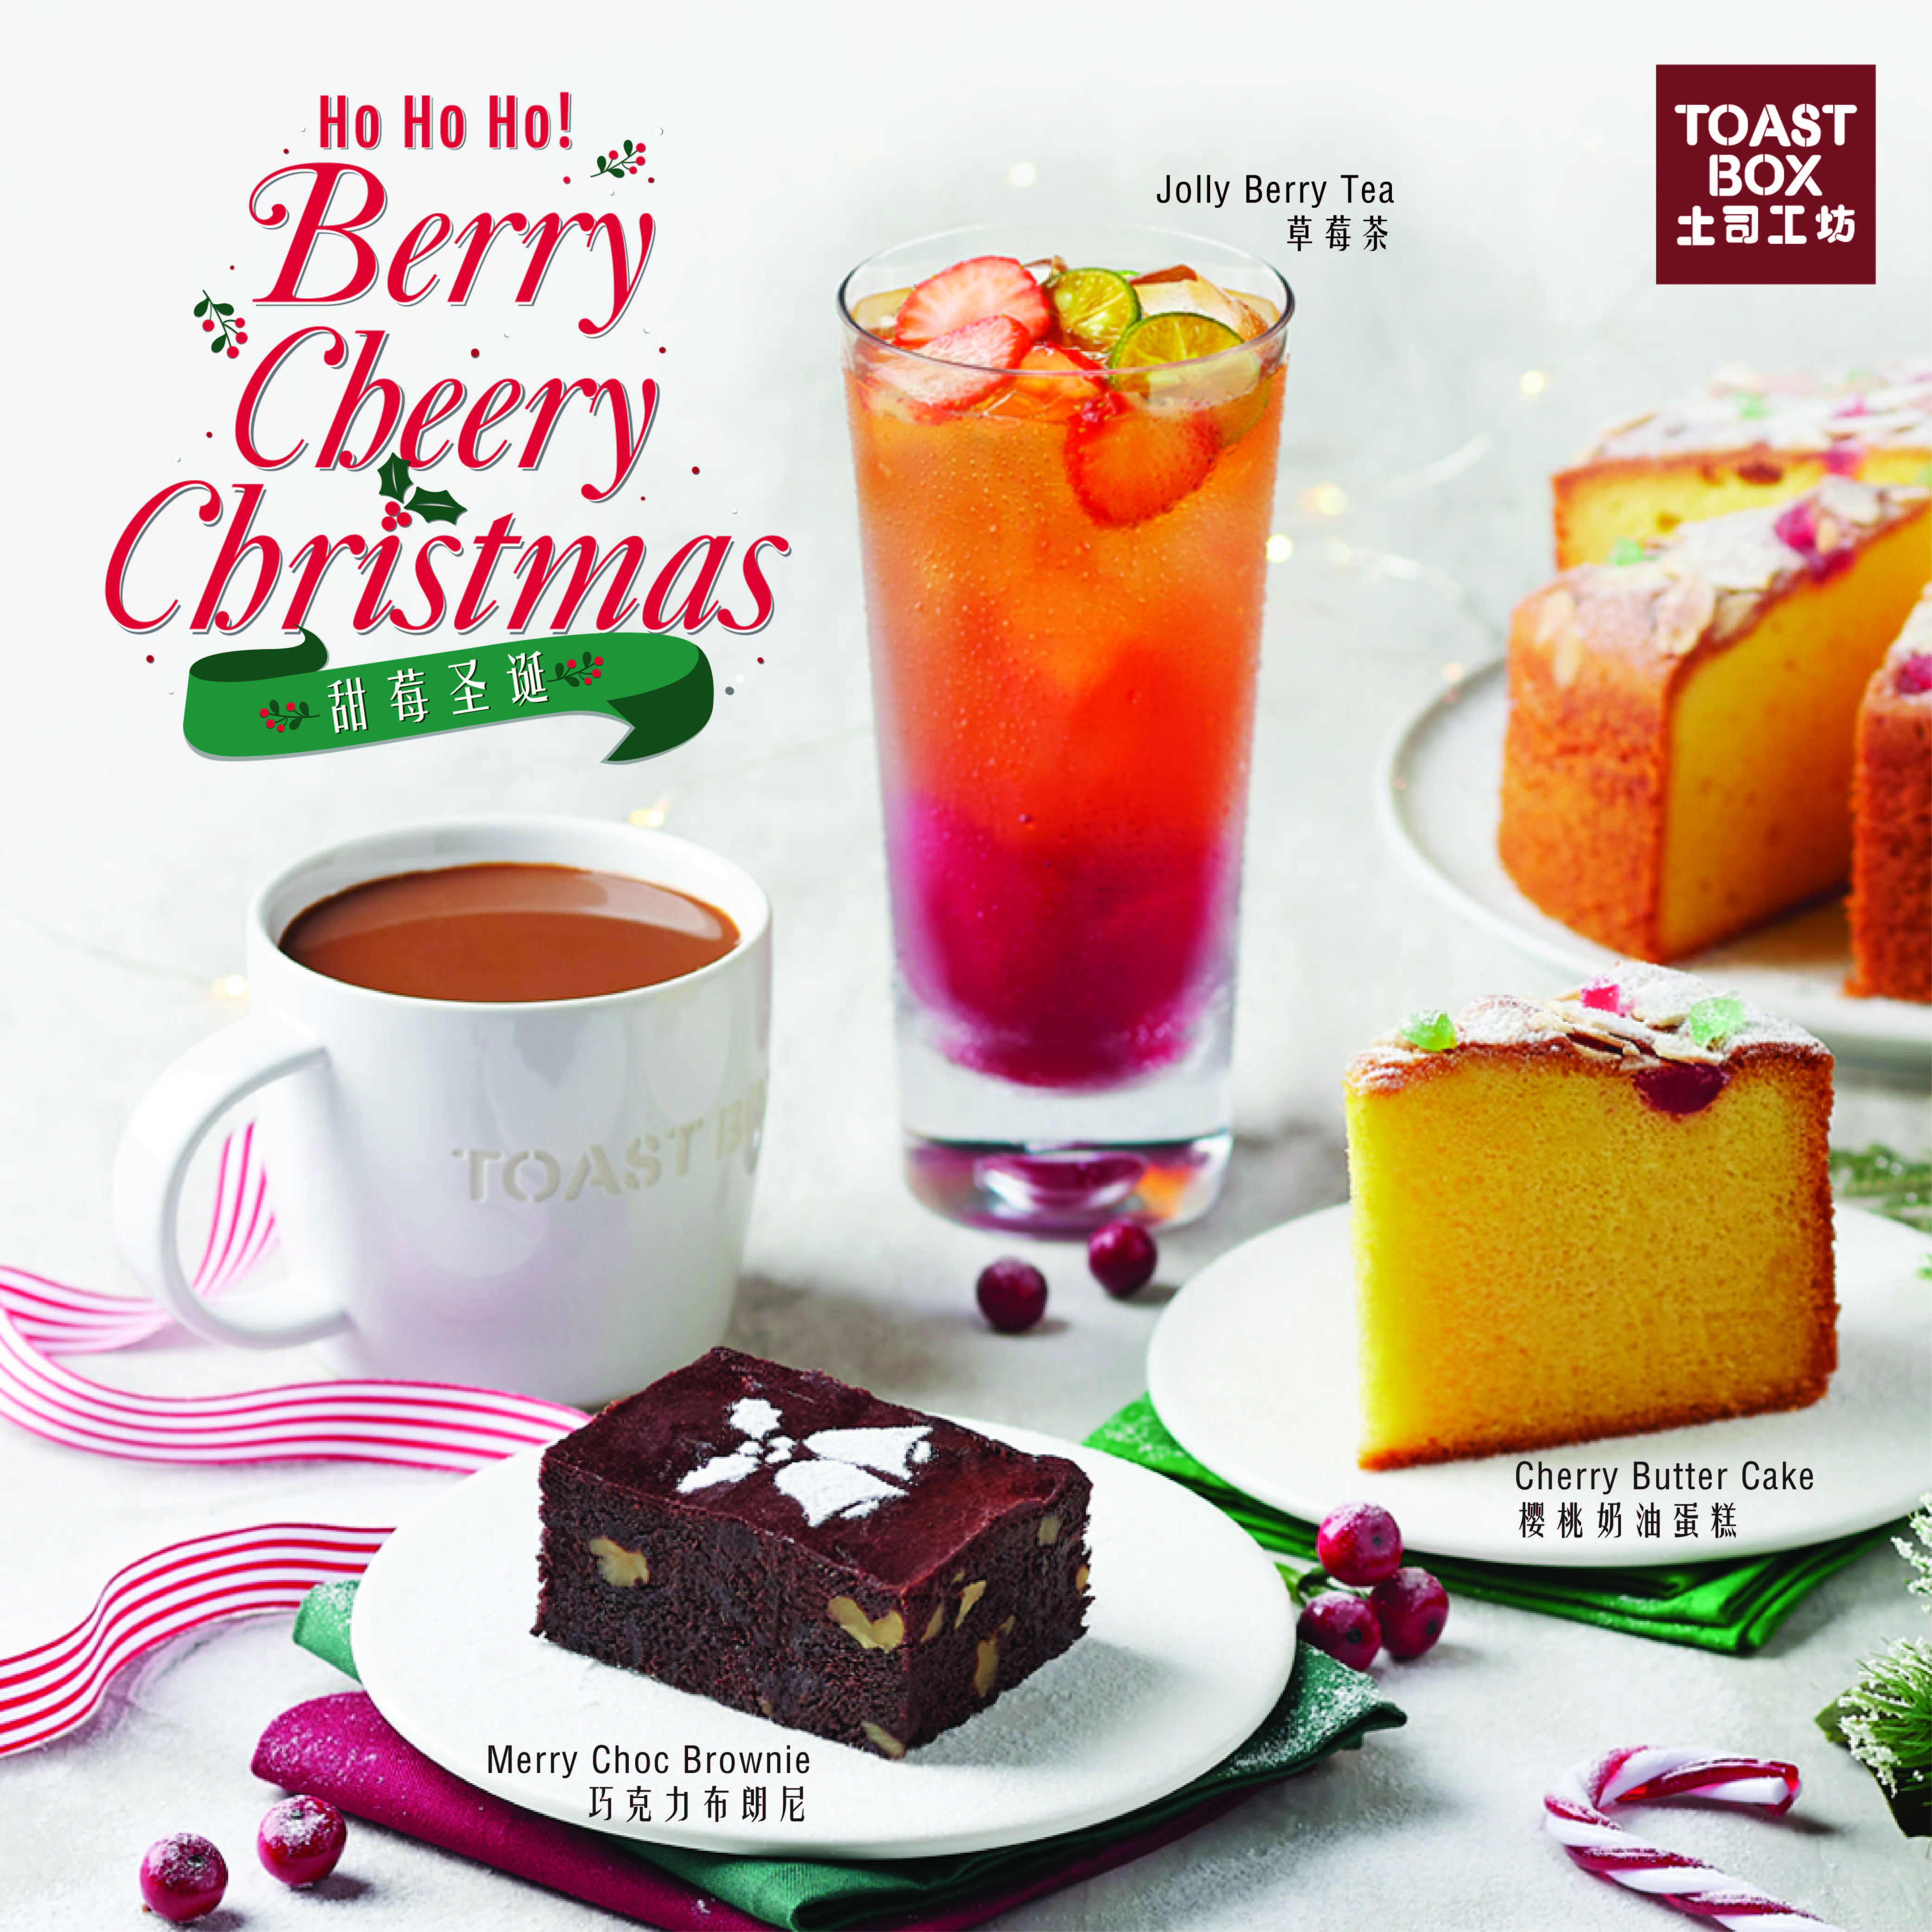 A Berry Cheery Christmas With Toast Box’s Festive Treats